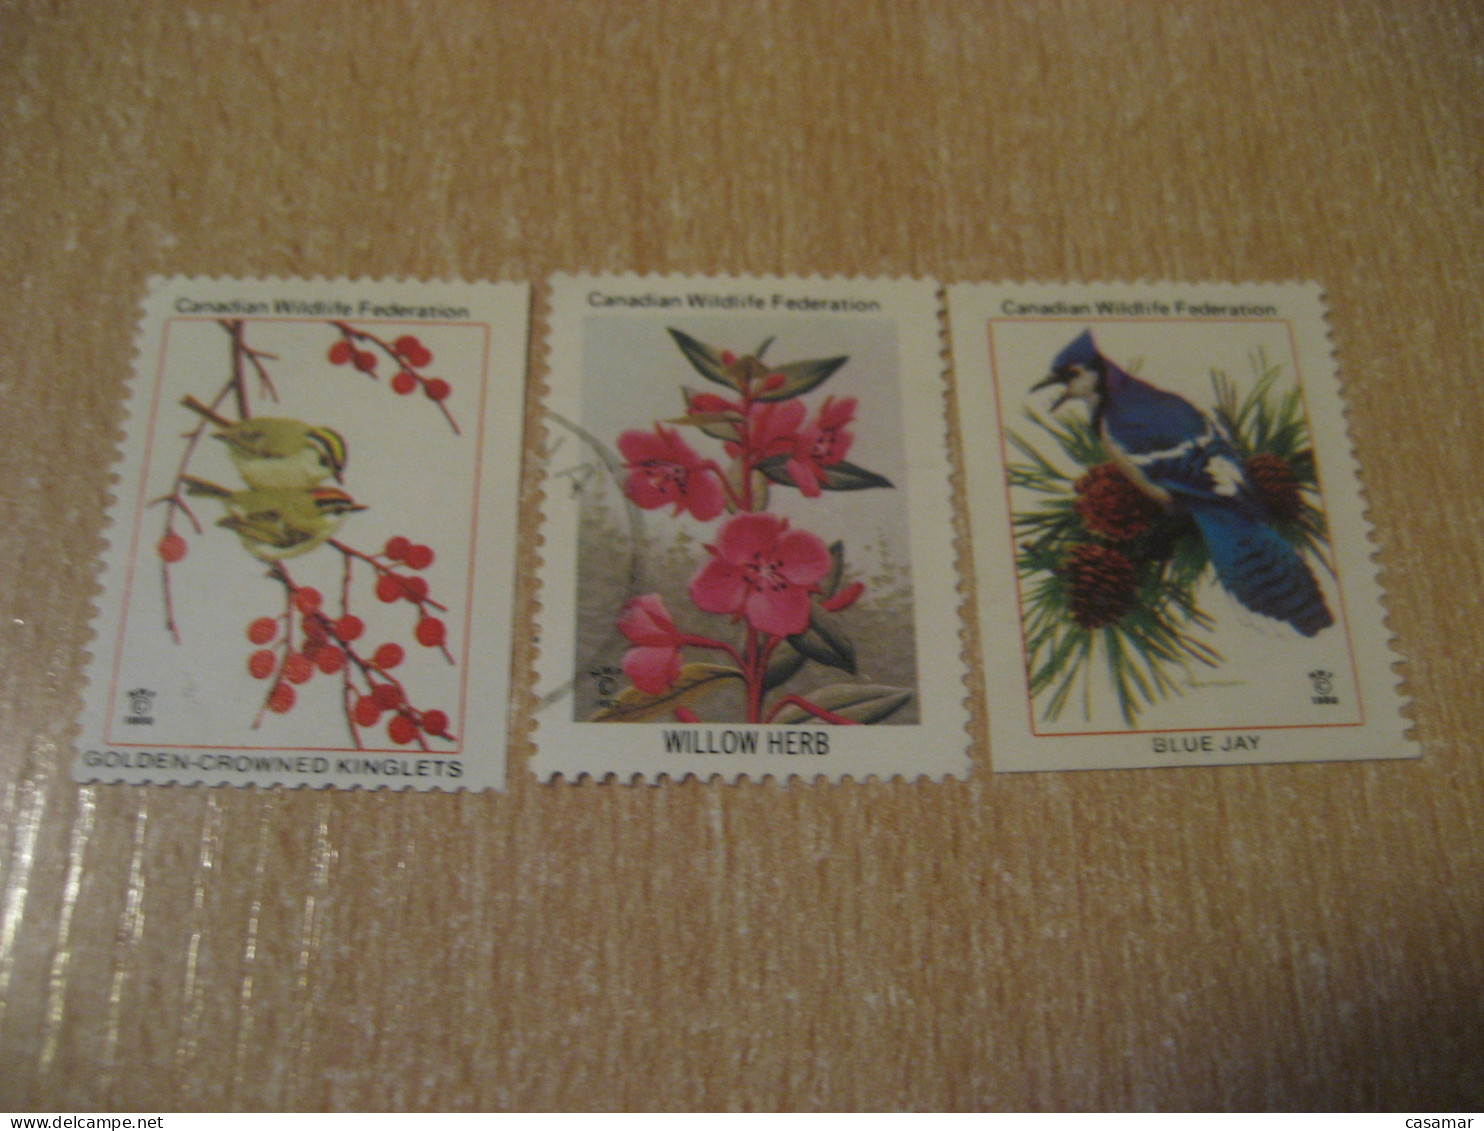 Canadian Wildlife Federation Bird Birds Flower Flora 3 Poster Stamp Vignette CANADA Label Seal - Privaat & Lokale Post